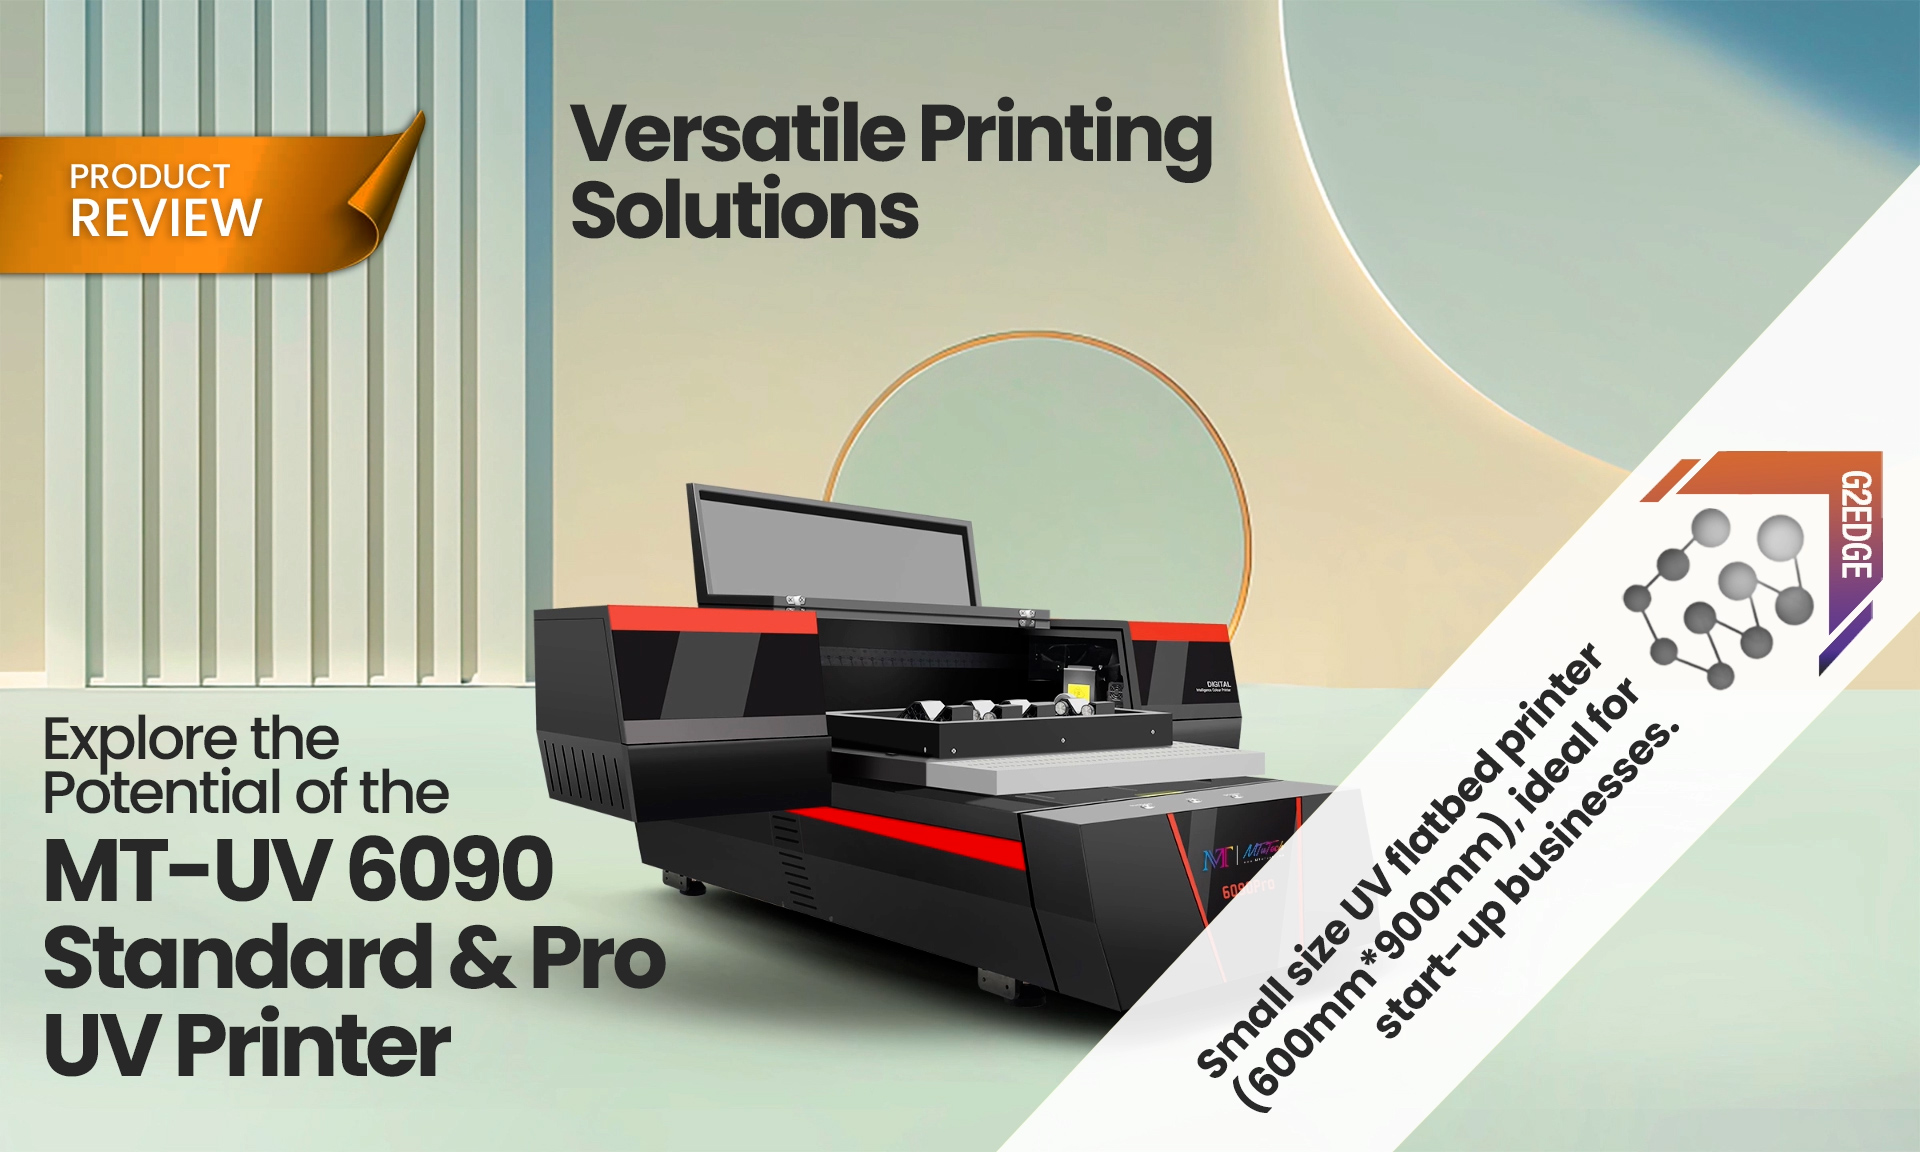 Versatile printing solution cover page design portfolio sajid rashid